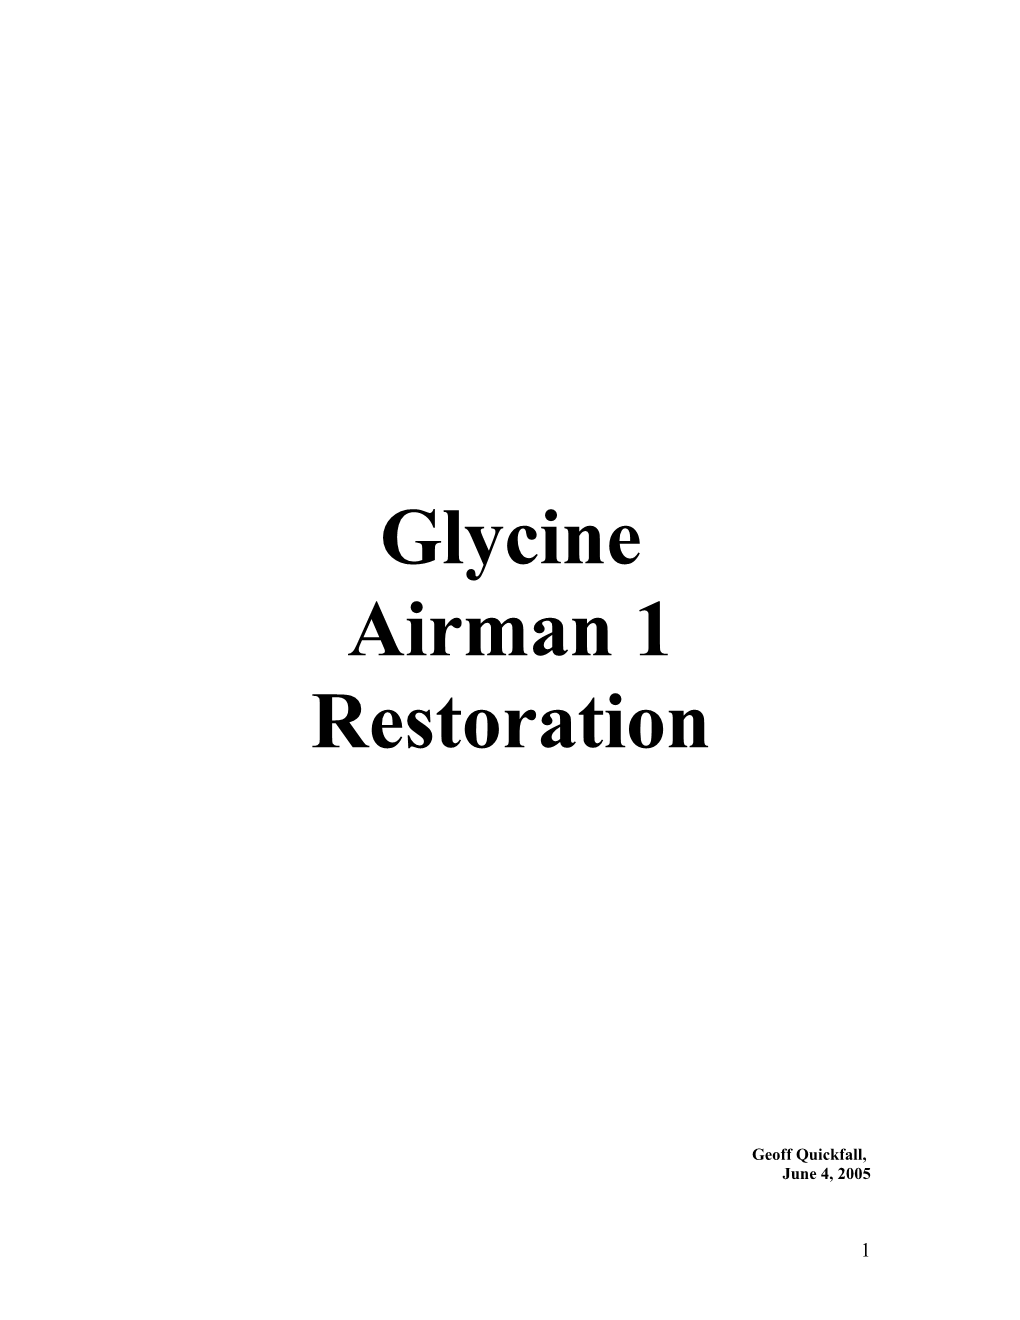 Glycine Airman 1 Case Restoration